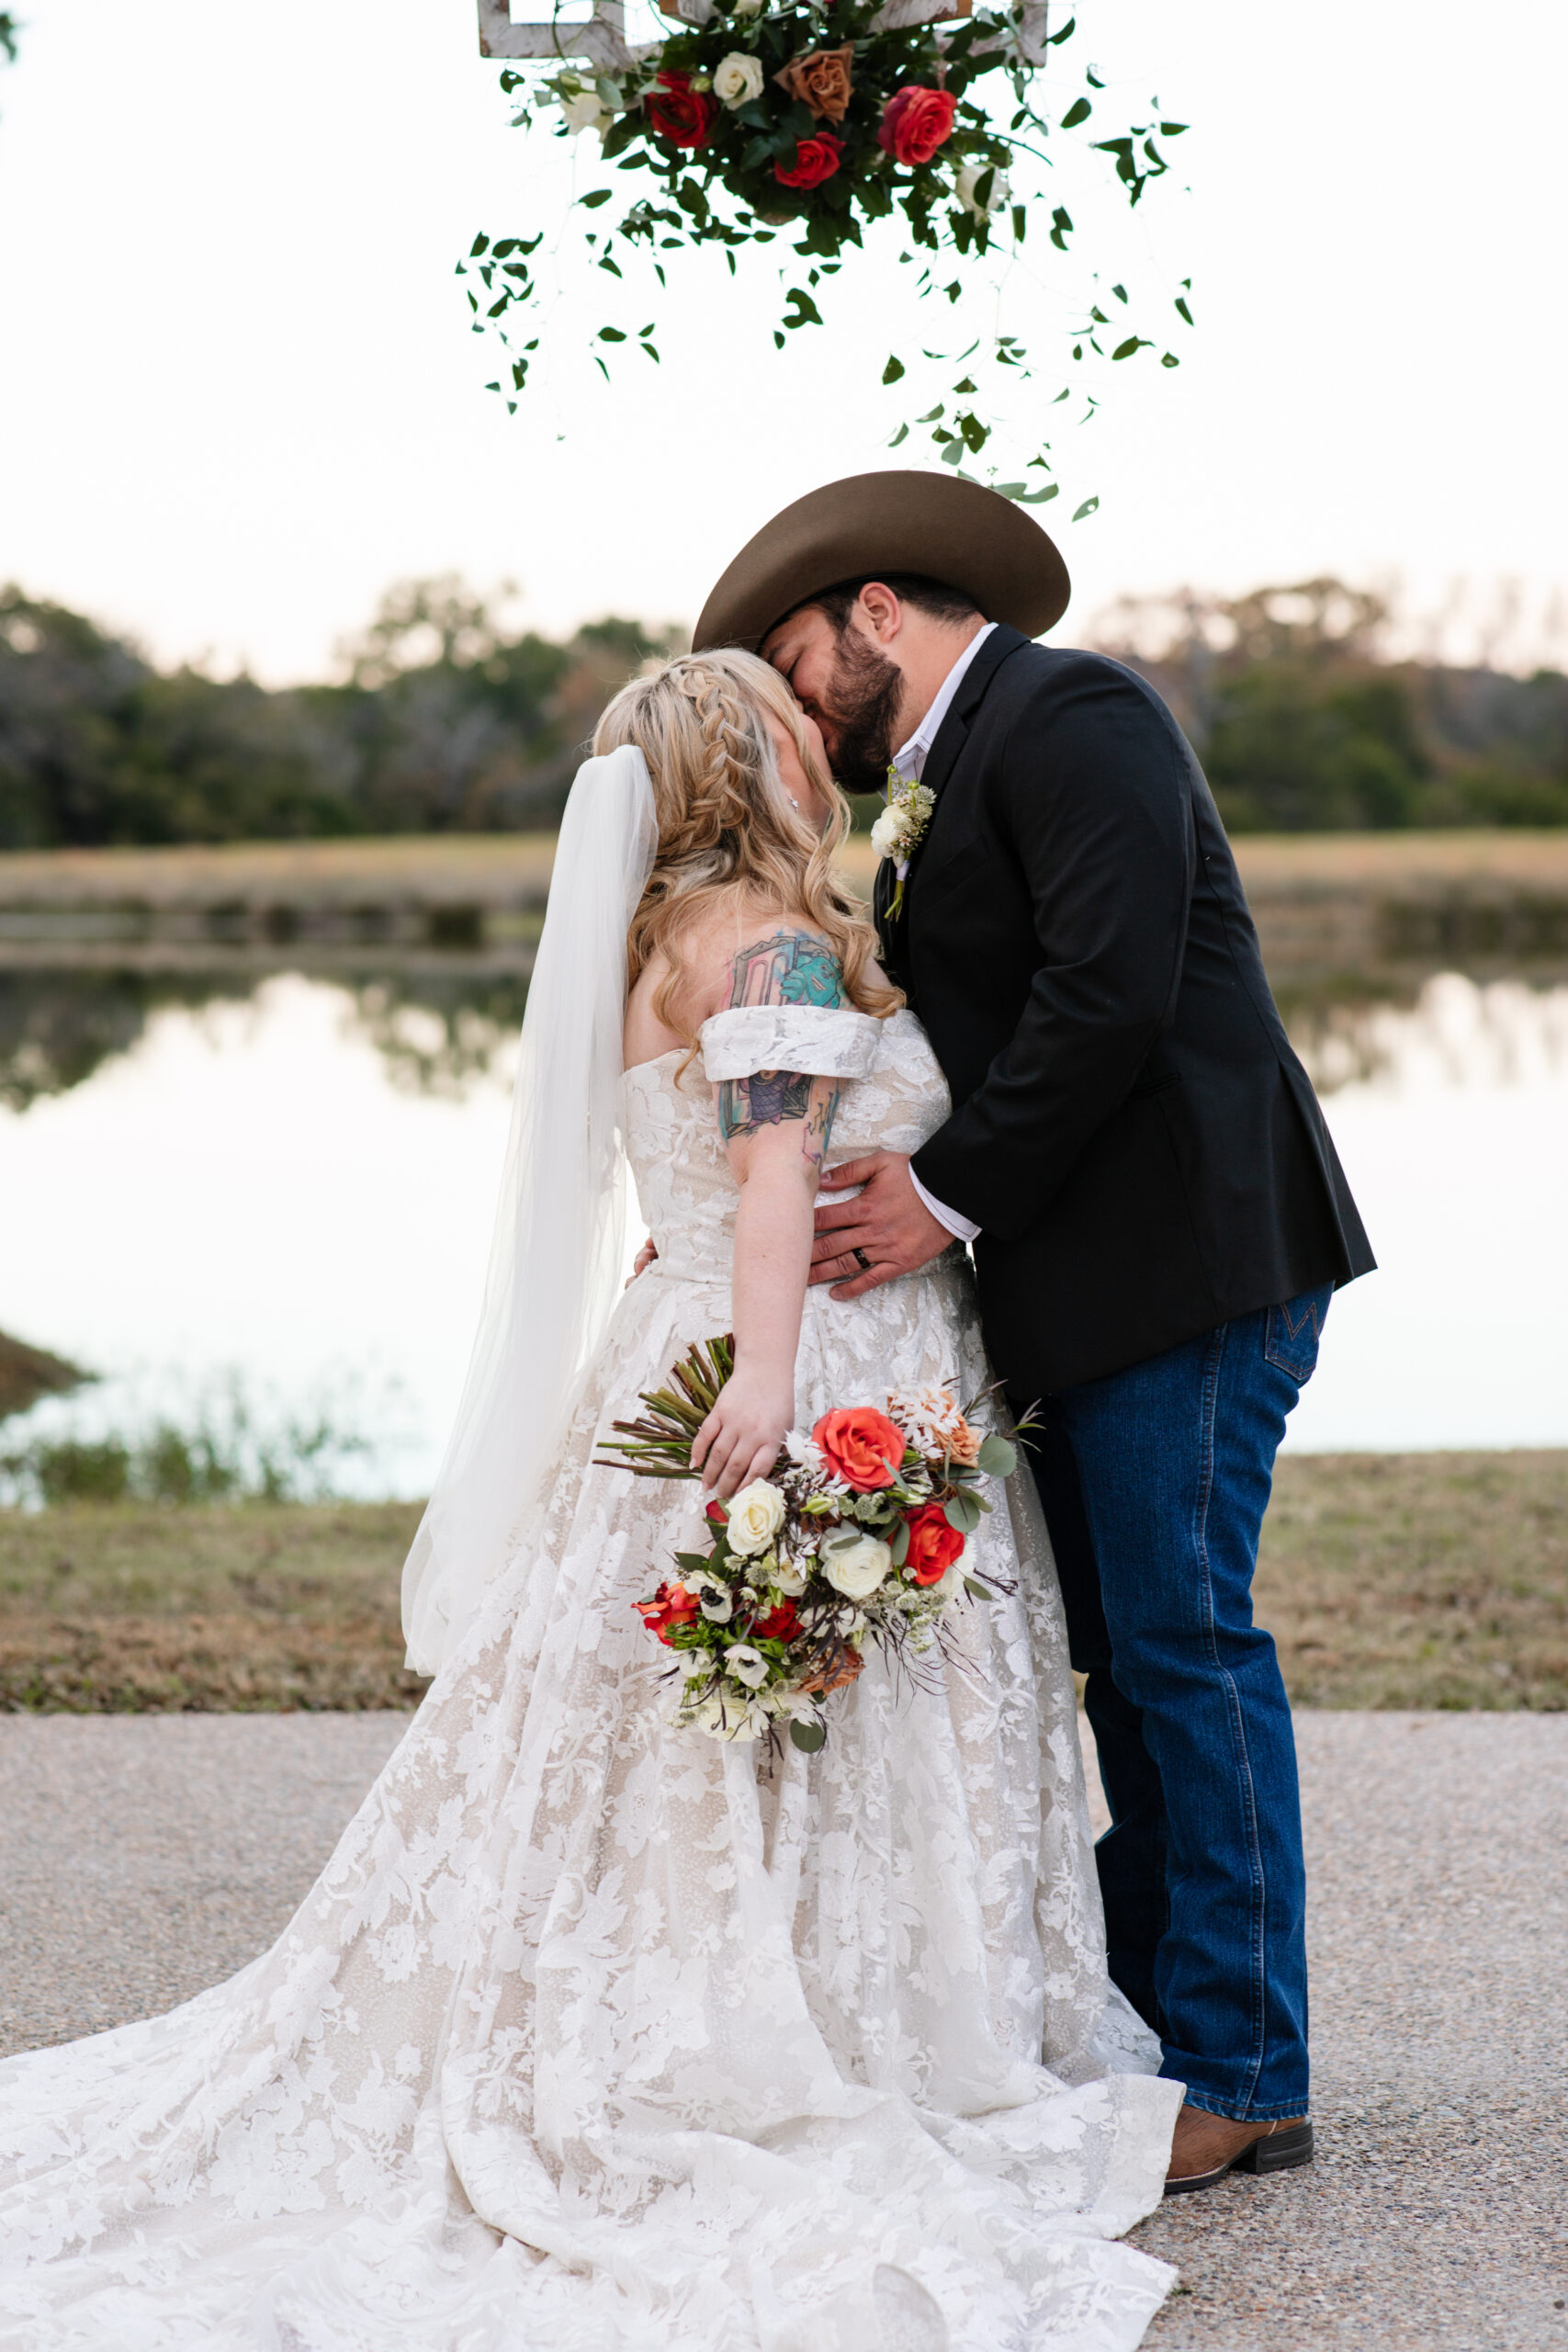 DFW wedding photographer, East Texas wedding photographer, DFW wedding photography packages, The Wildflower Event Venue, DFW wedding venues